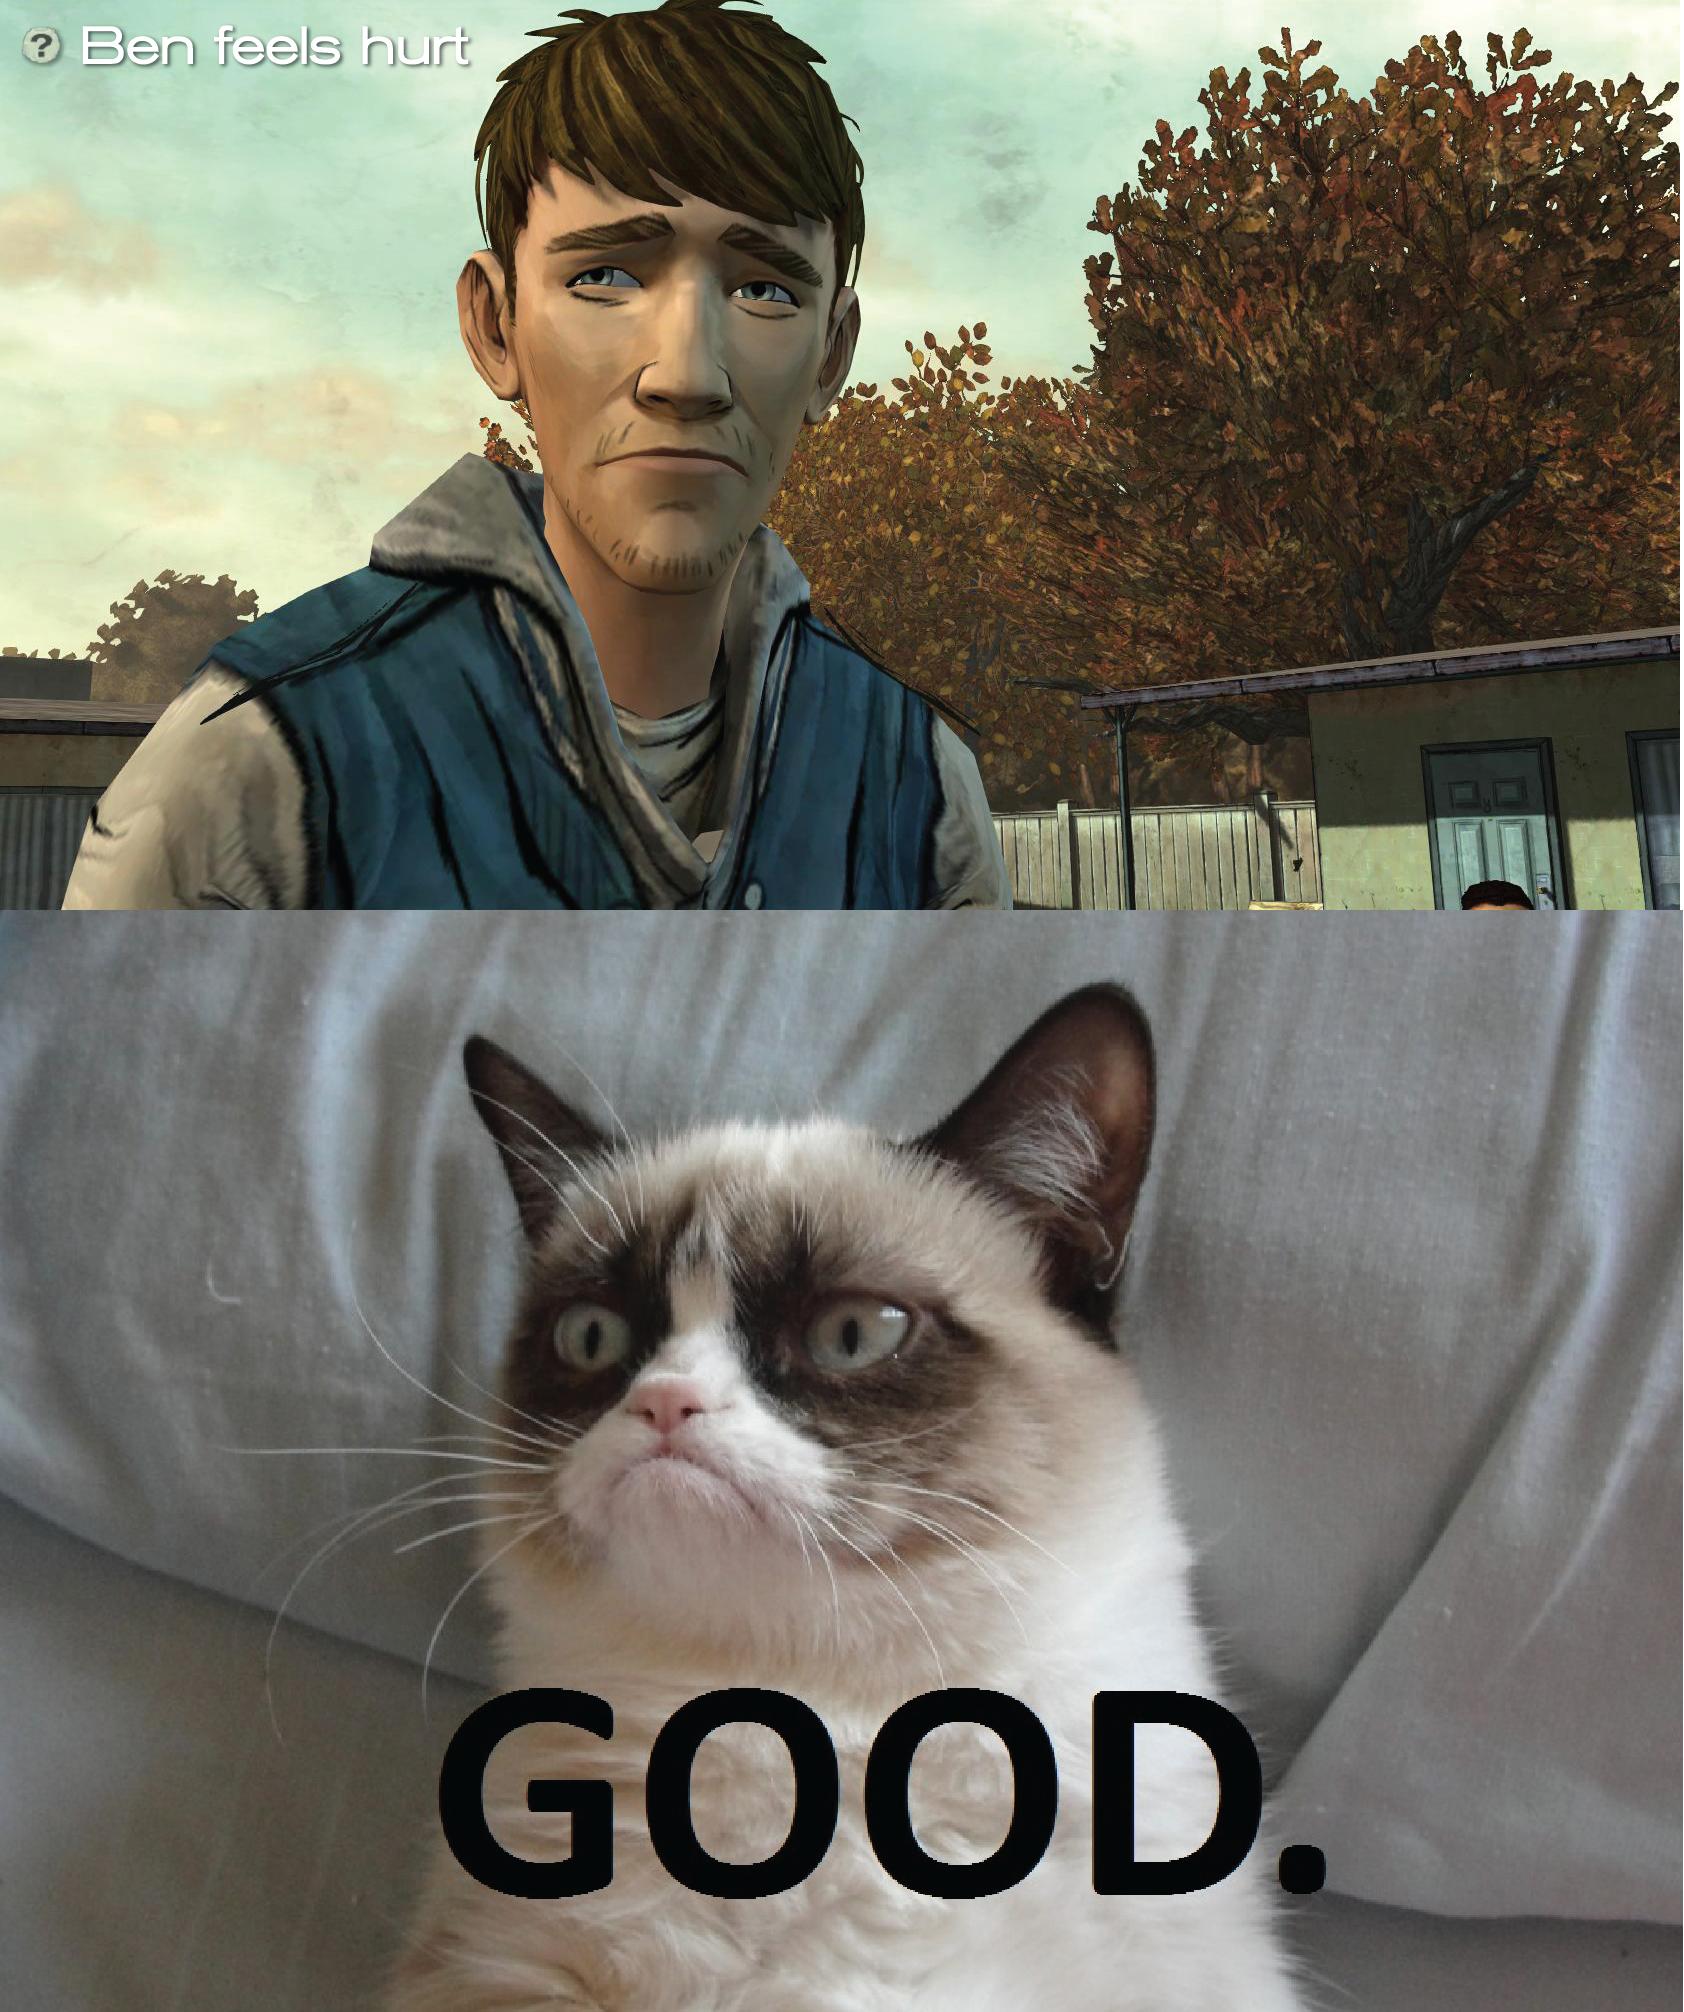 grumpy cat good night meme - ? Ben feels hurt Good.